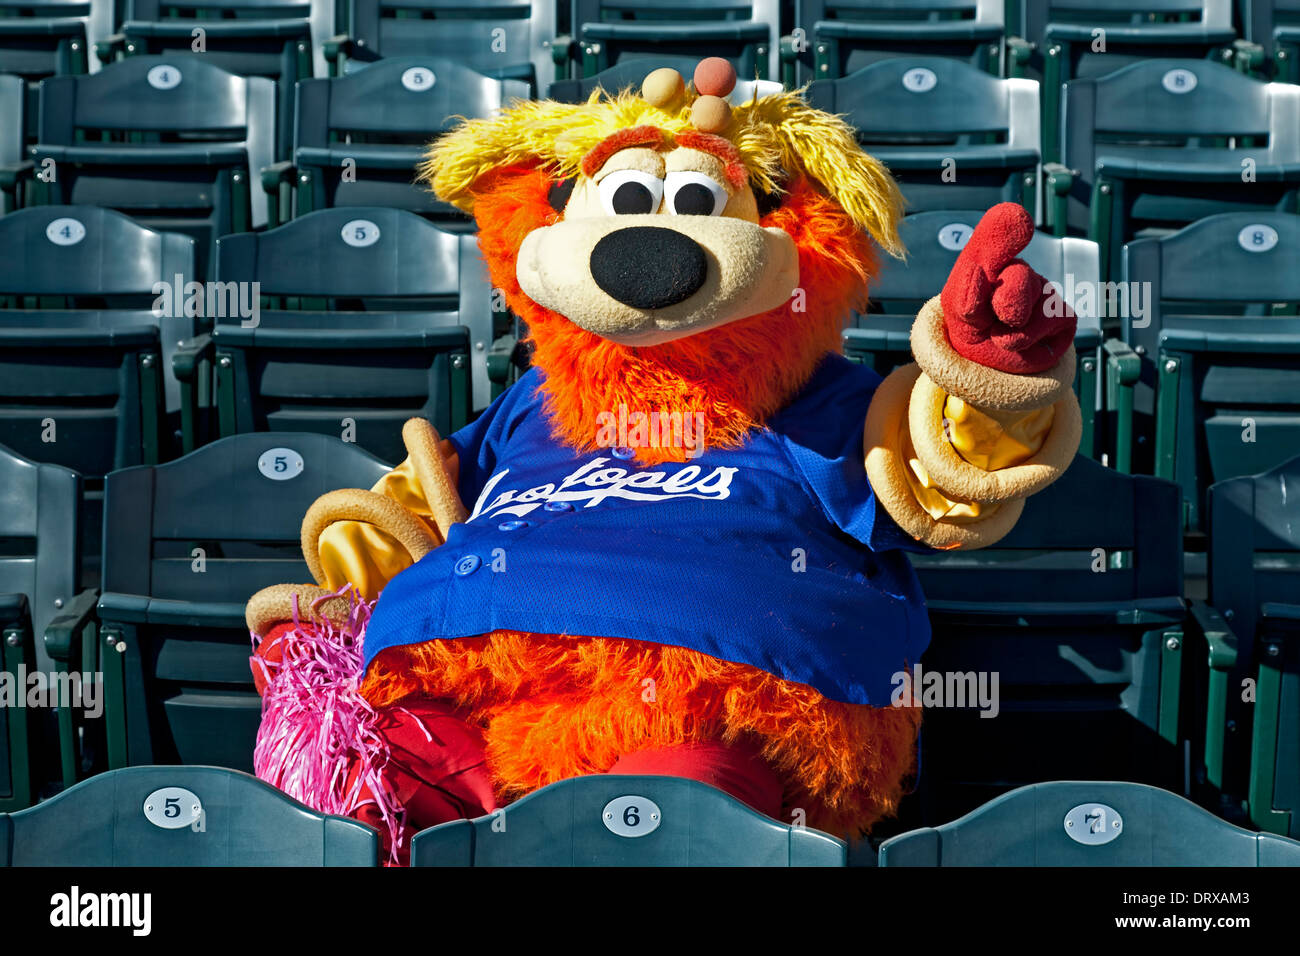 Orbit (Isotopes Baseball Team mascot) in stadium seats flashing No.1 sign, Isotopes Park, Albuquerque, New Mexico Stock Photo